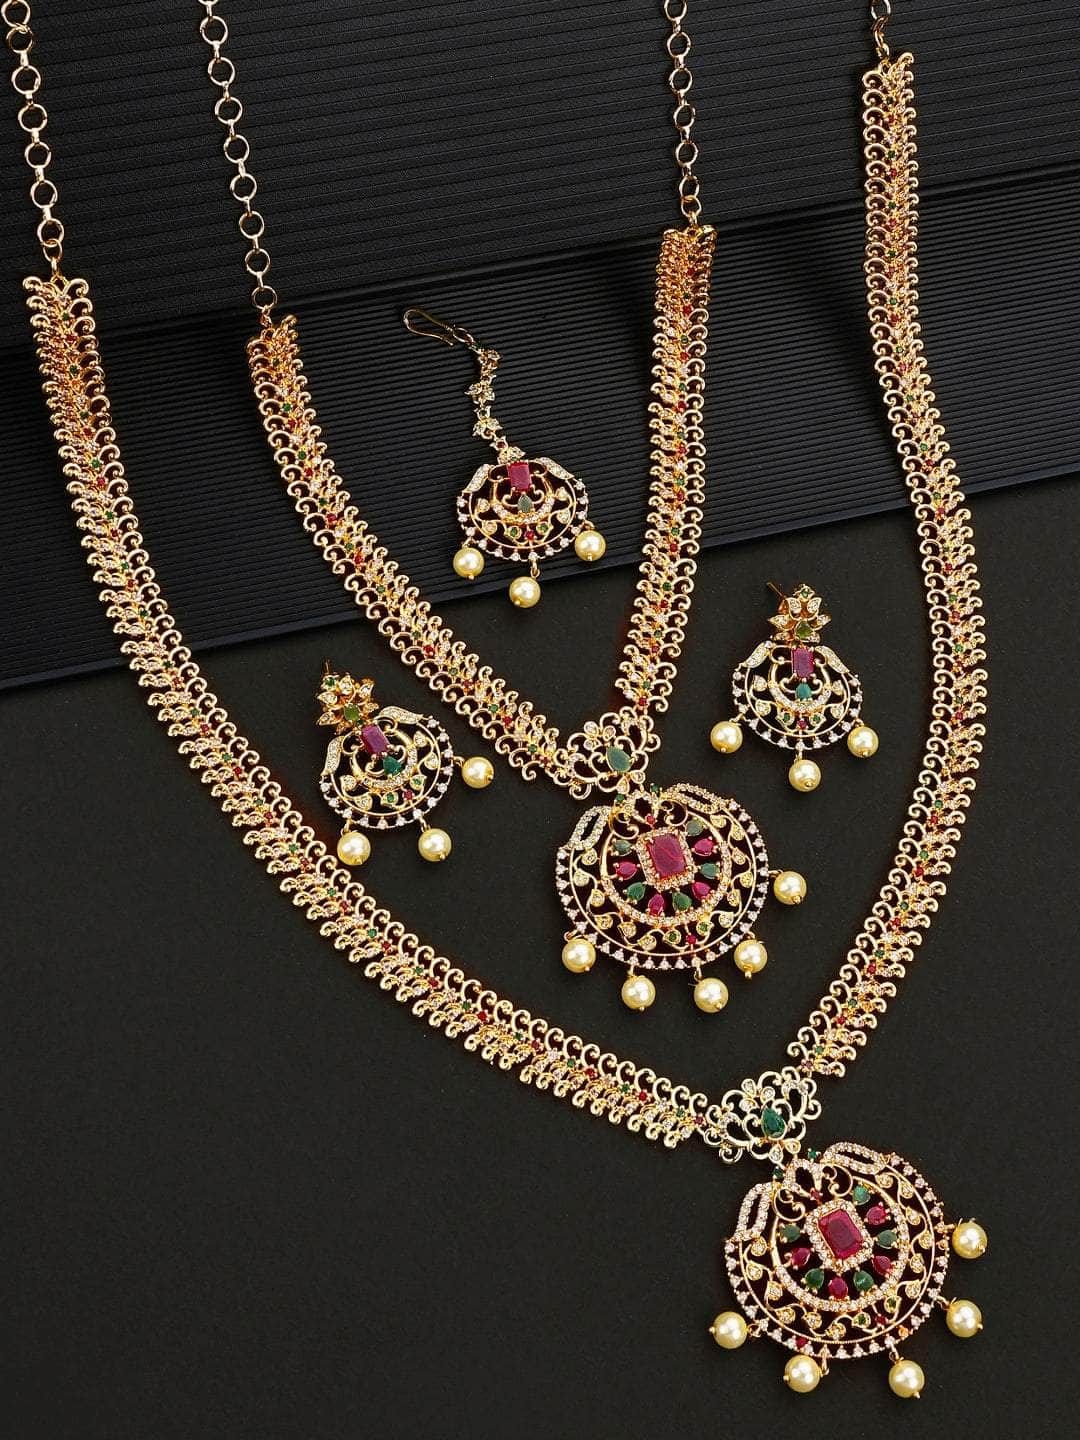 Ishhaara Stylish AD necklace set with drop earrings